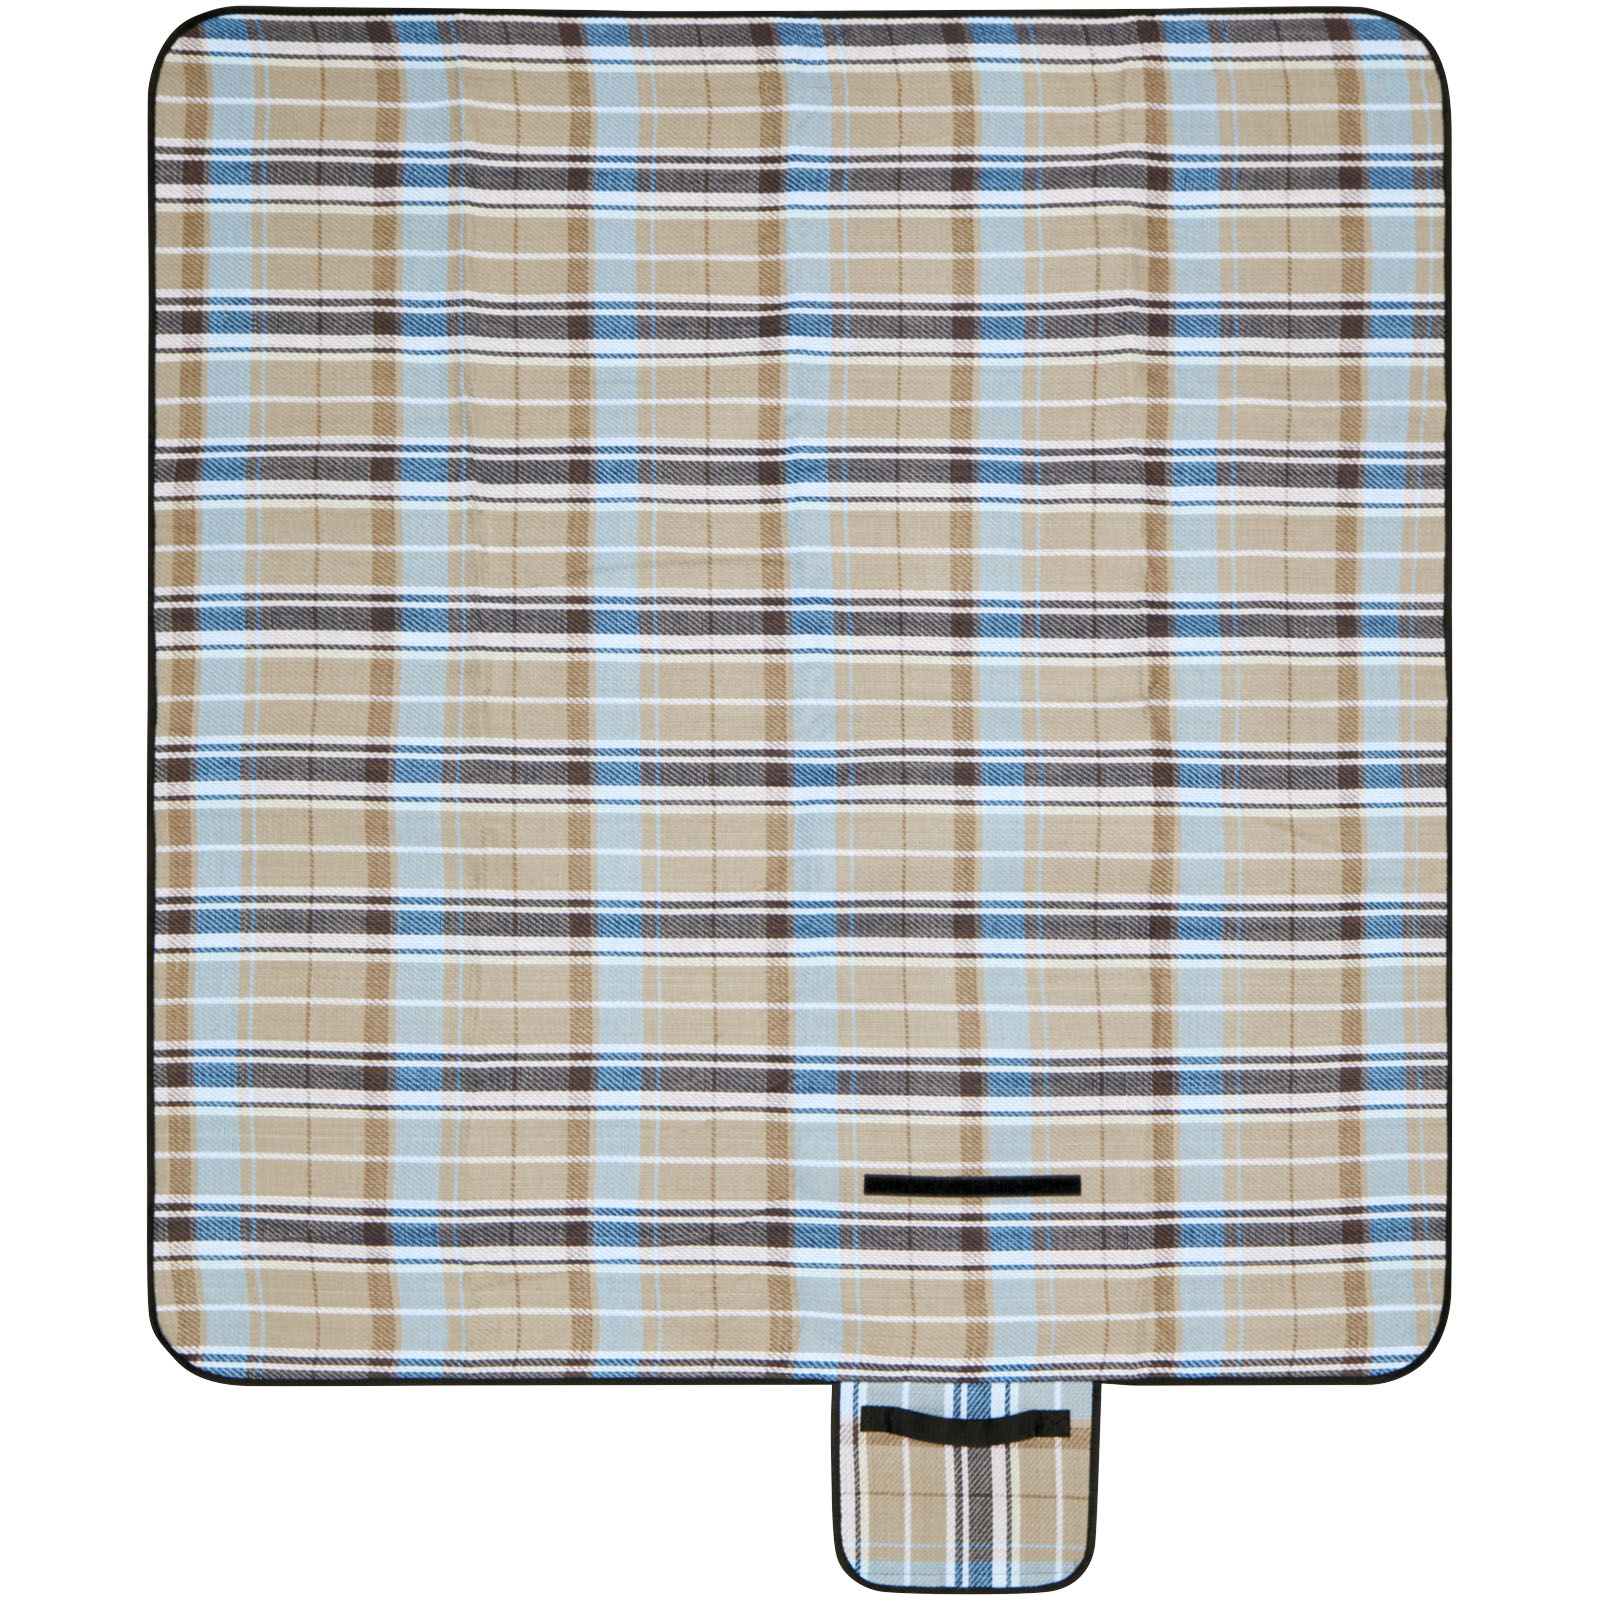 Advertising Blankets - Sedum picnic blanket - 4